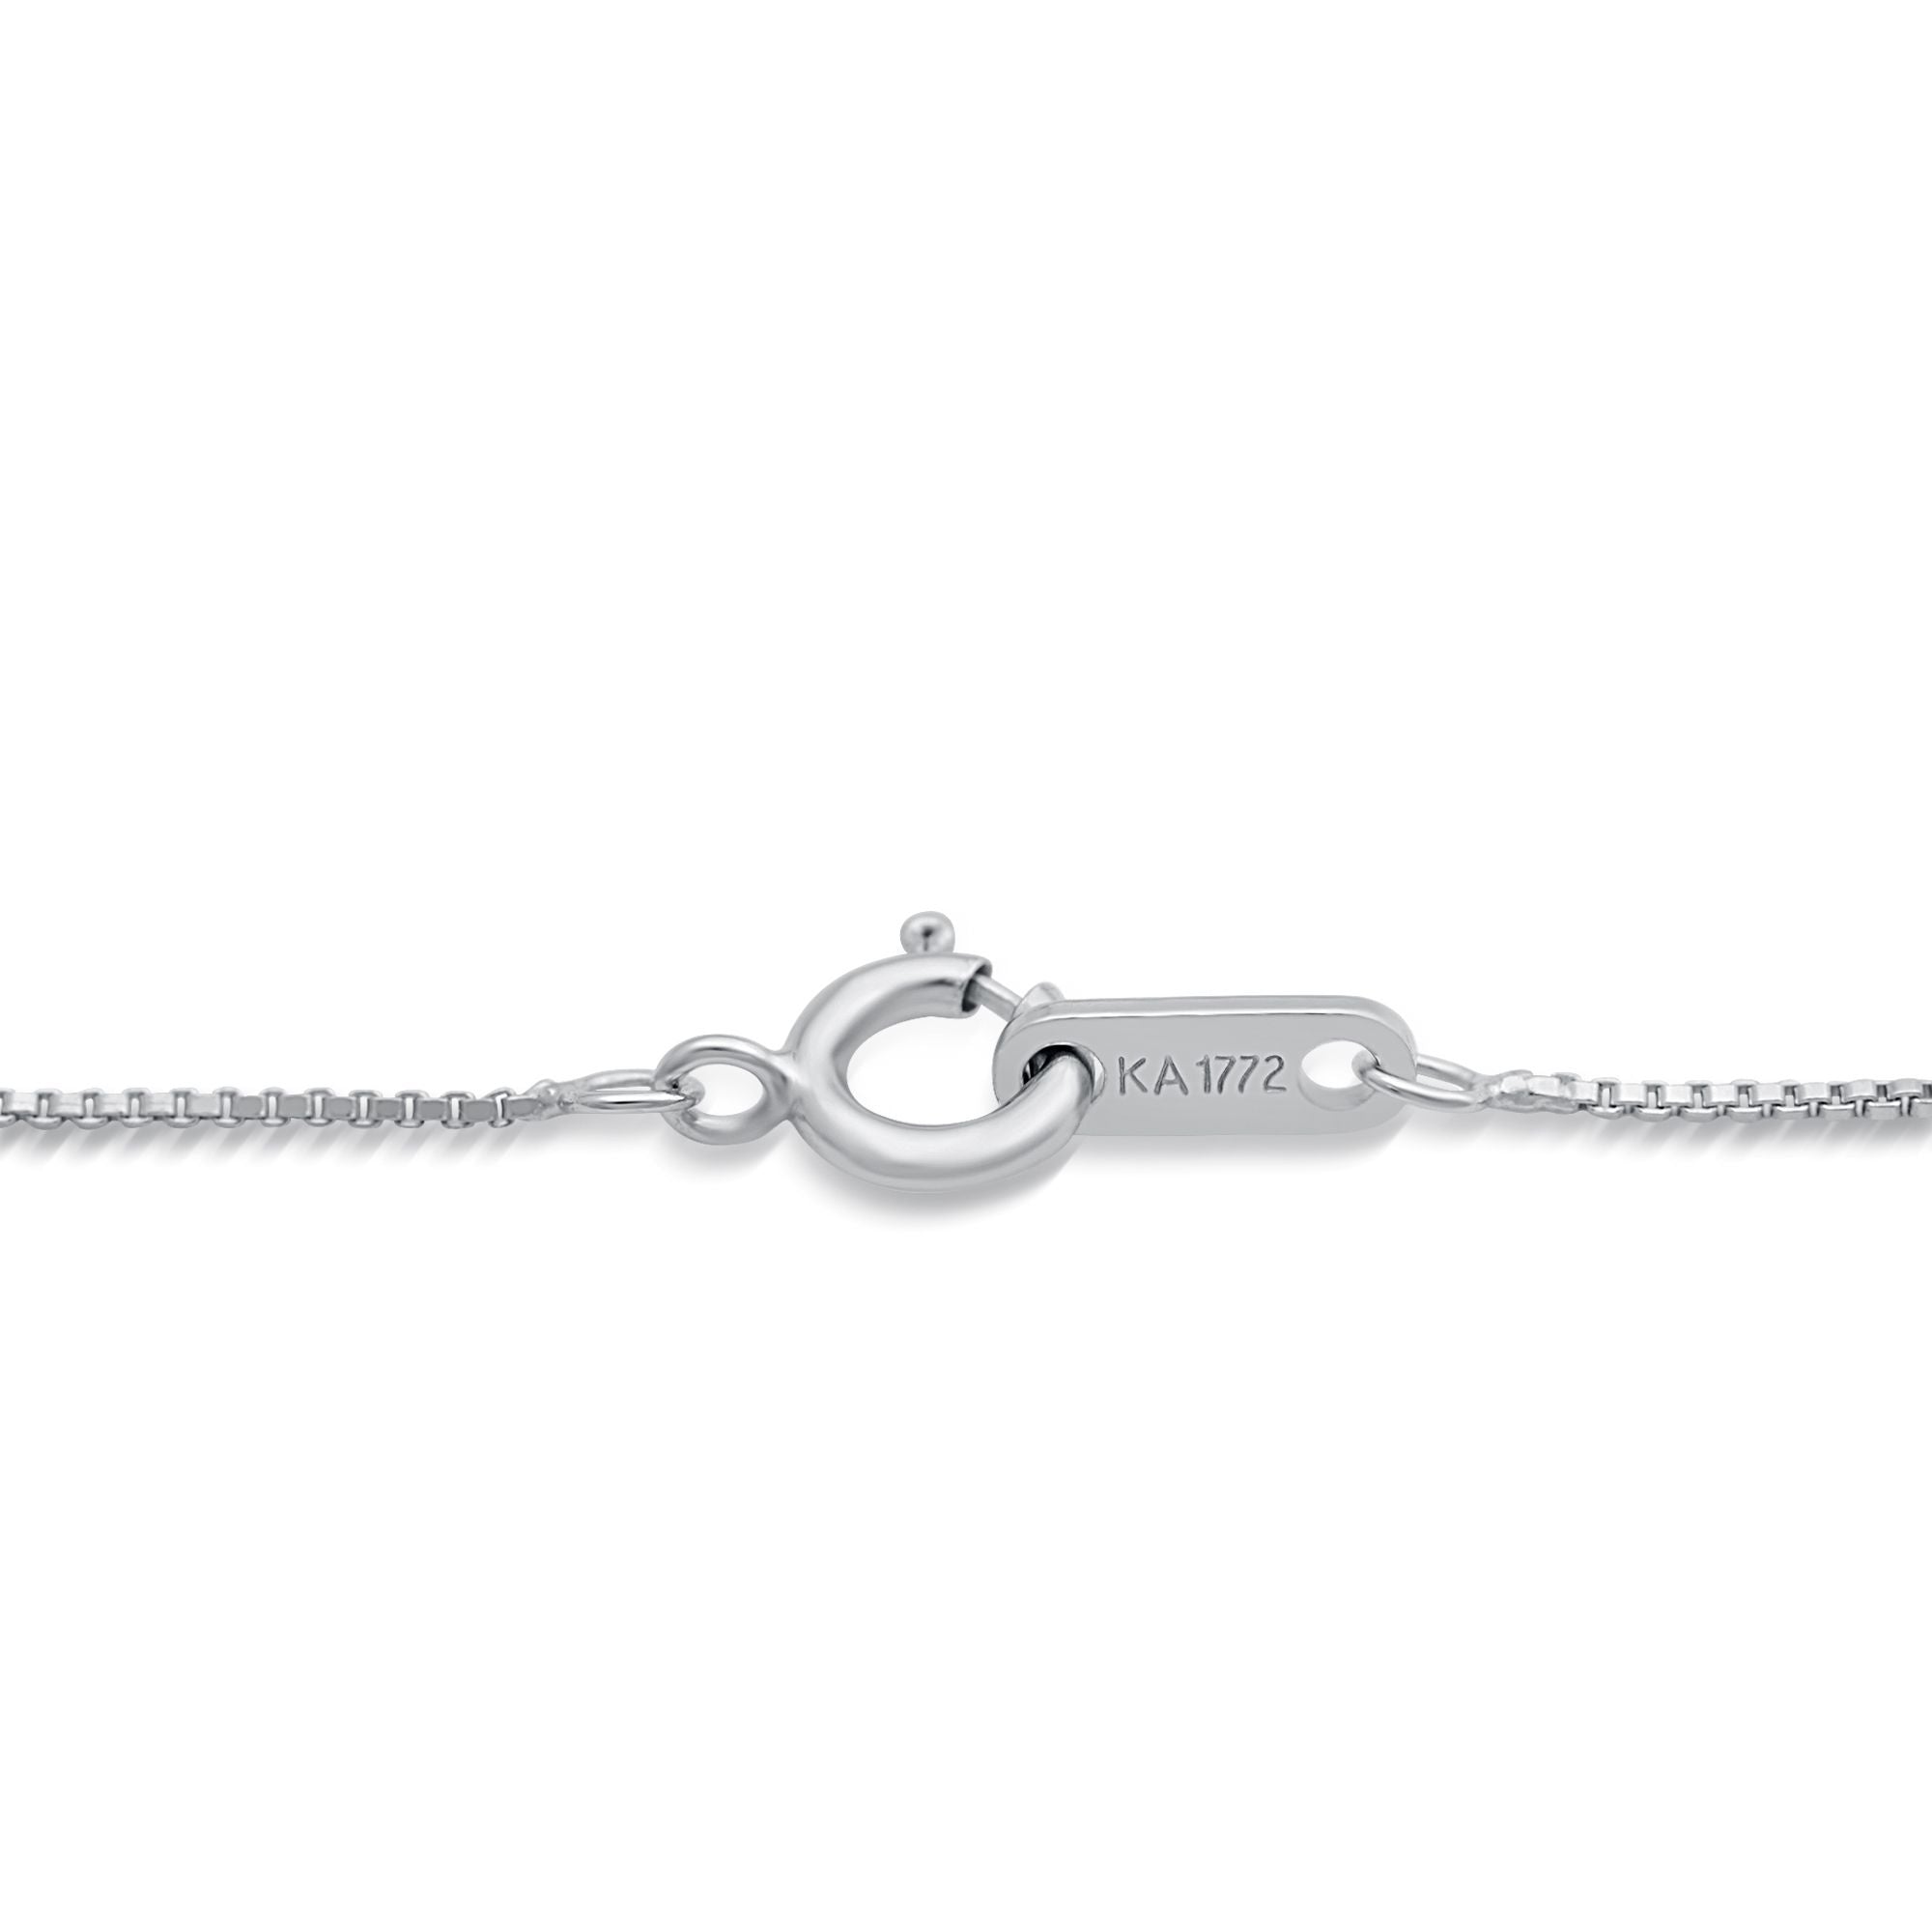 Jewelili Heart, Lock and Key Charm Pendant Toggle Necklace